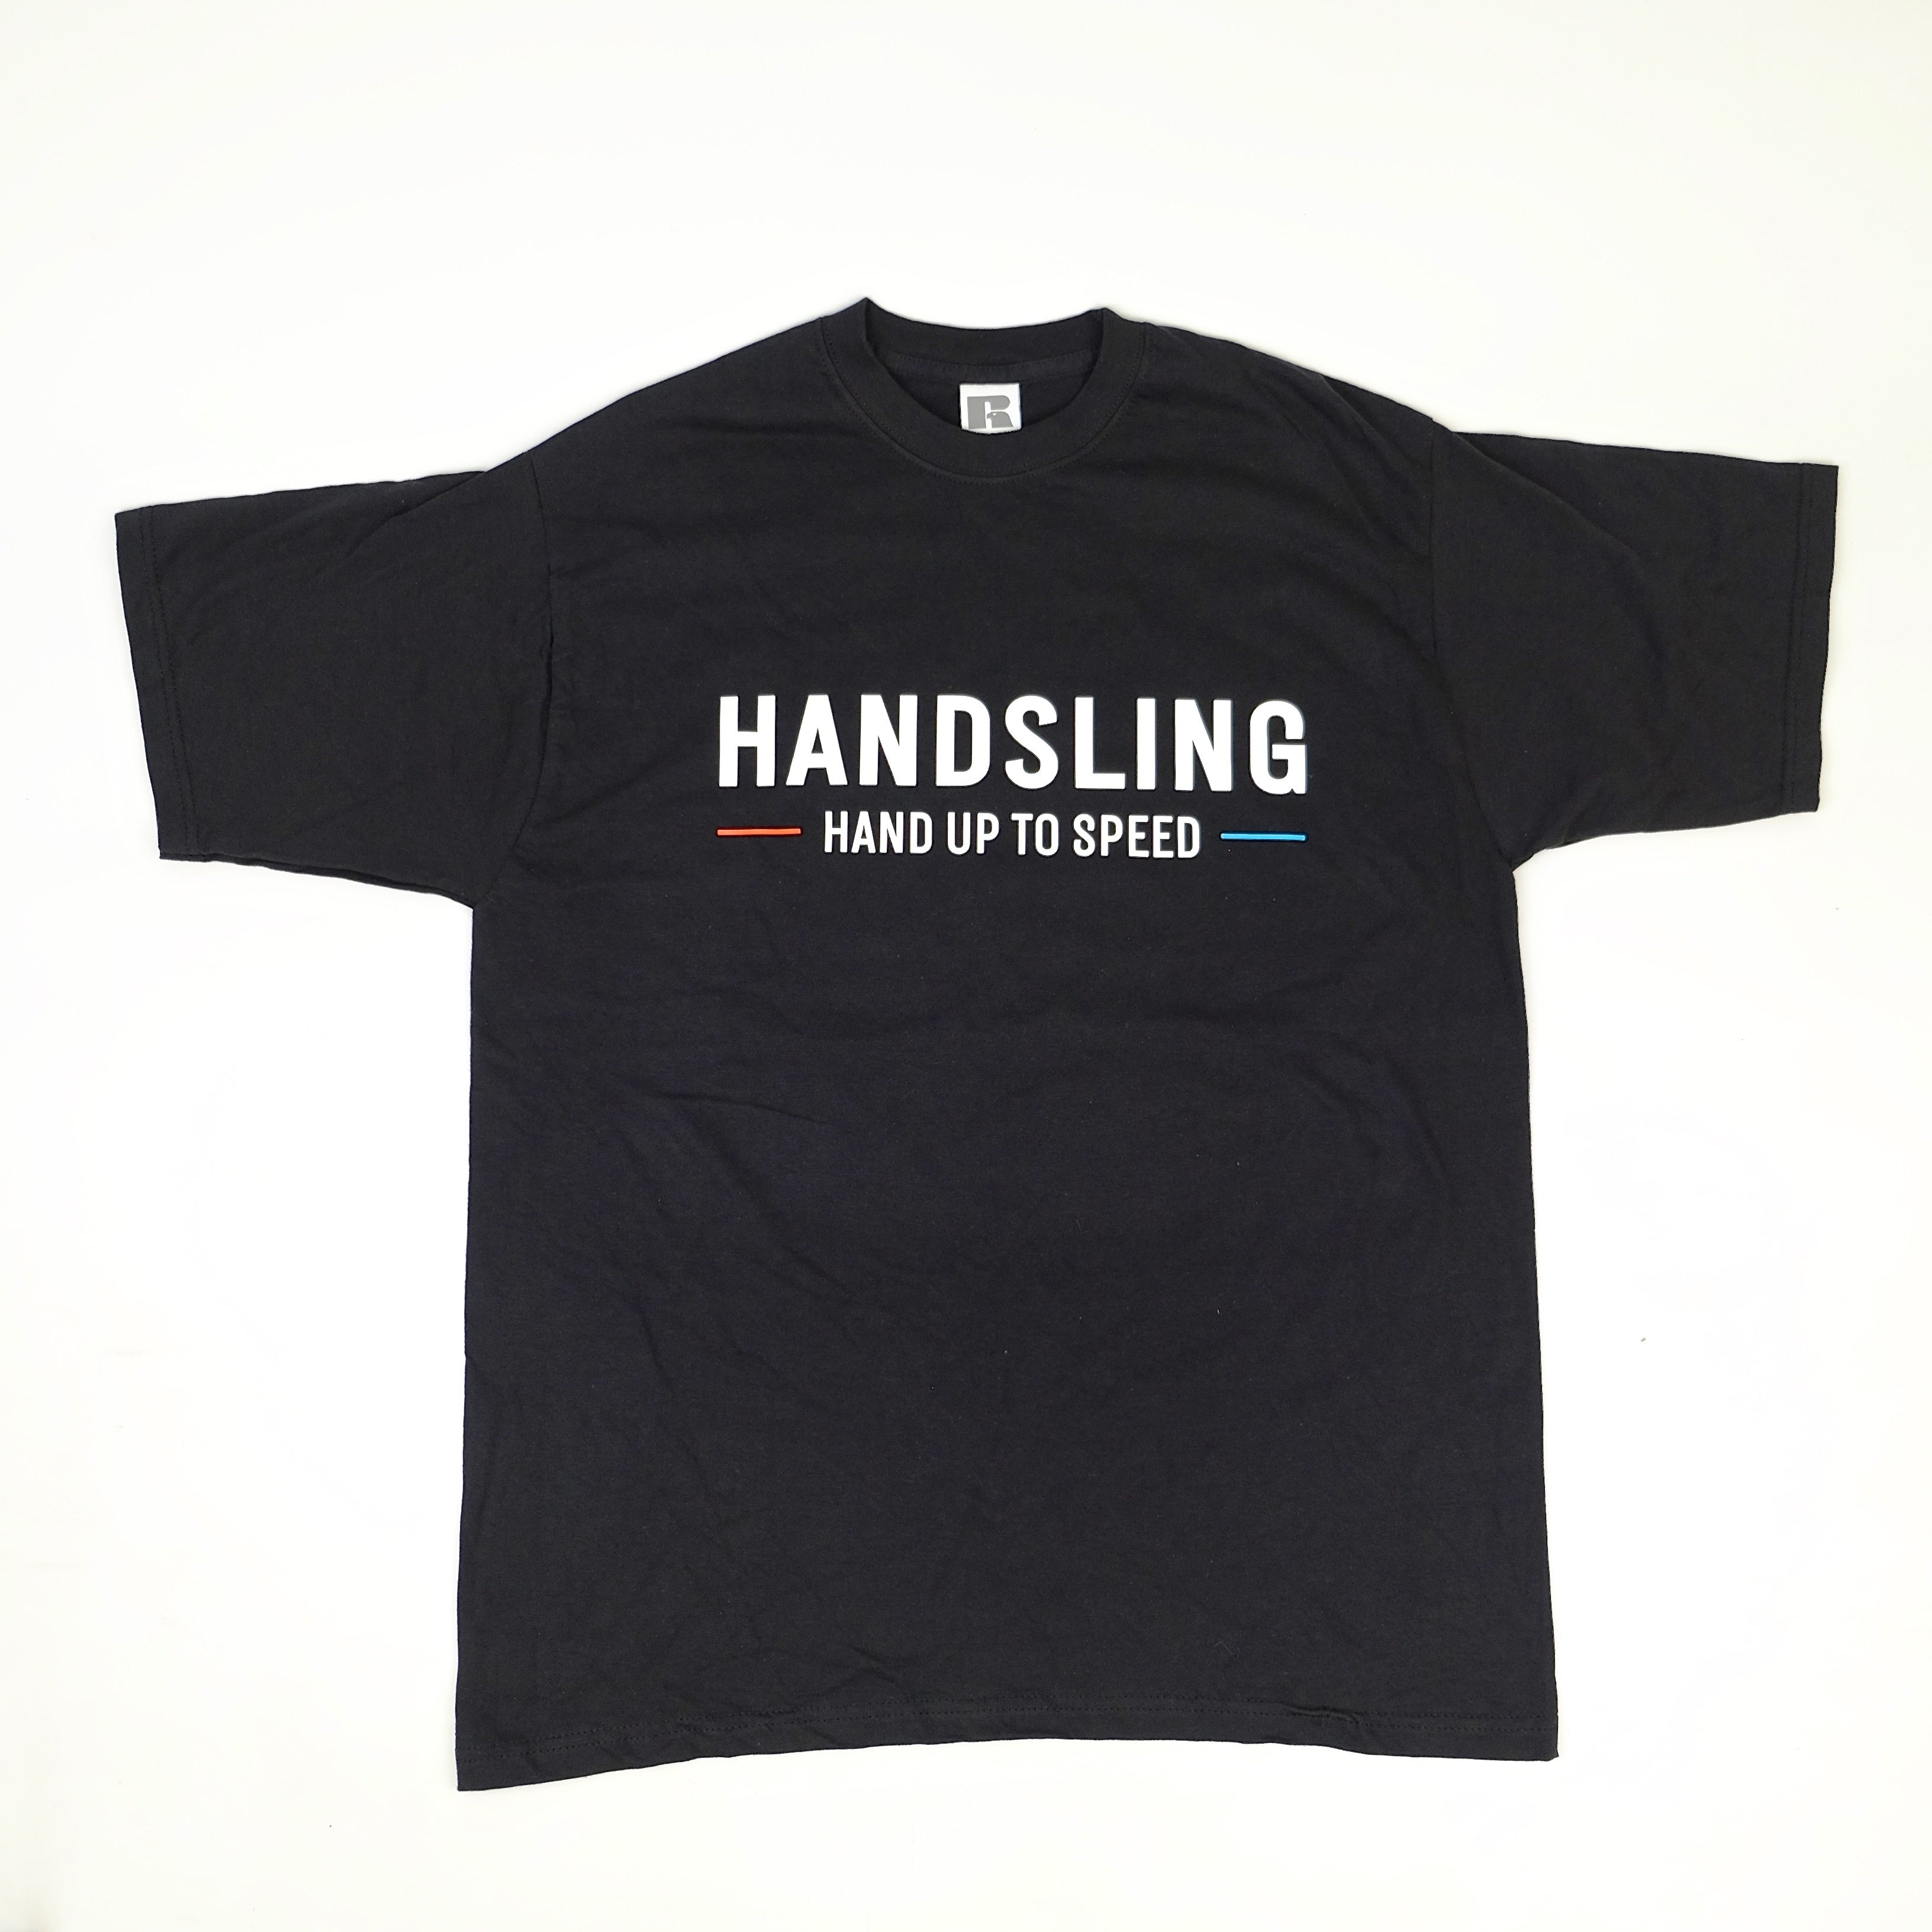 Camiseta Handsling Up-To-Speed